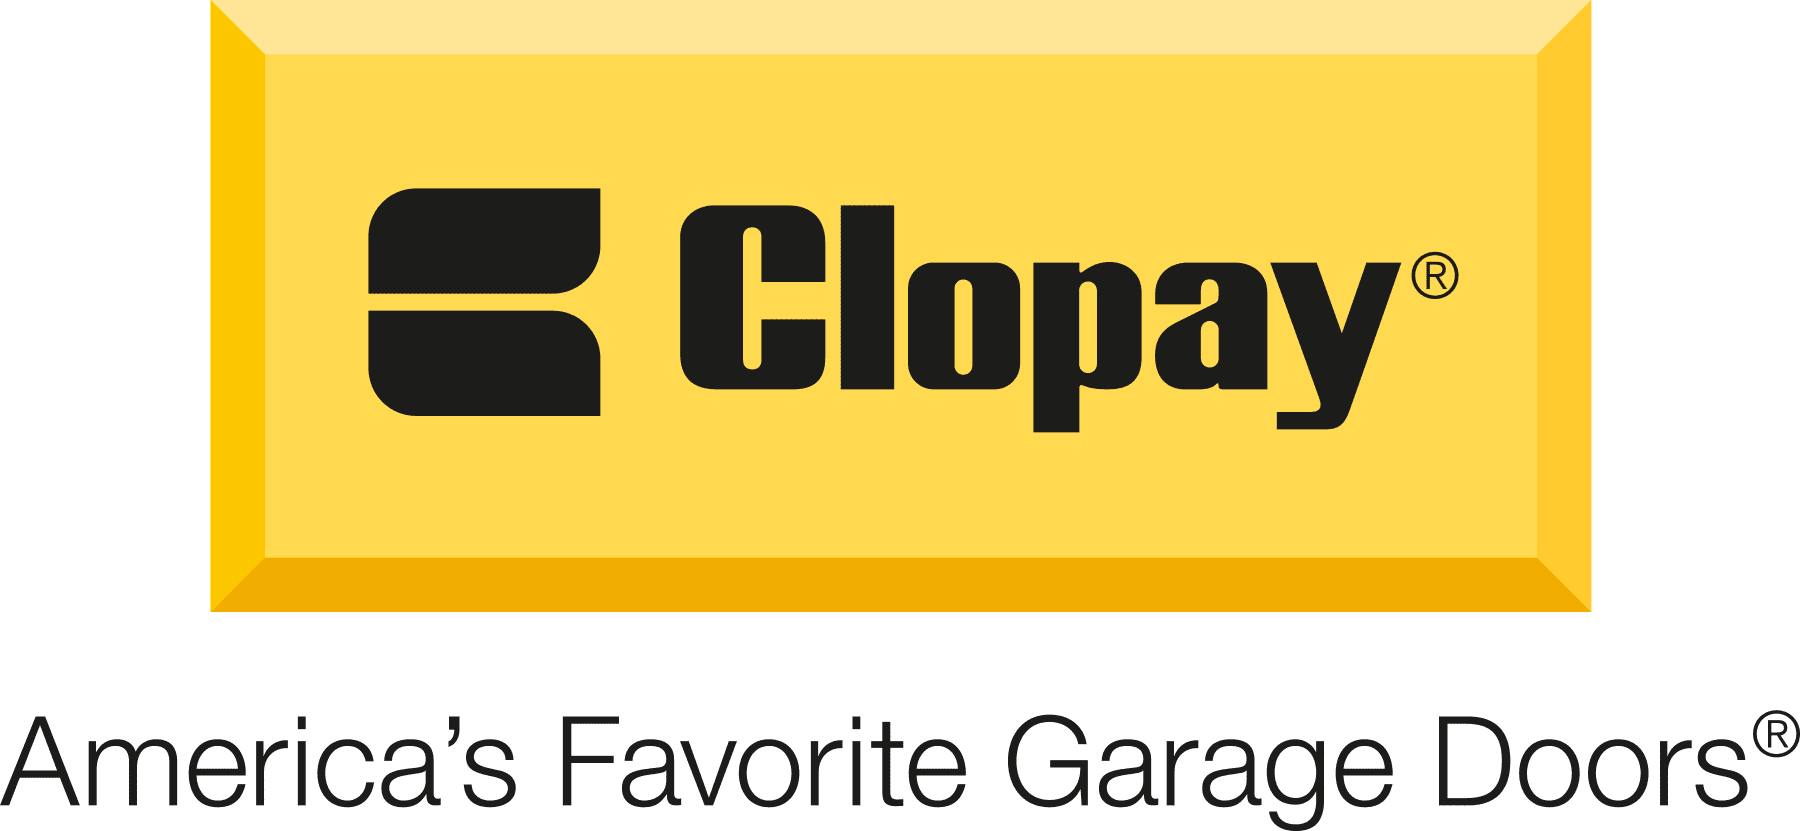 https://sobrinogaragedoors.com/wp-content/uploads/2020/03/Clopay-GoldBar-AFGD_RGB.png